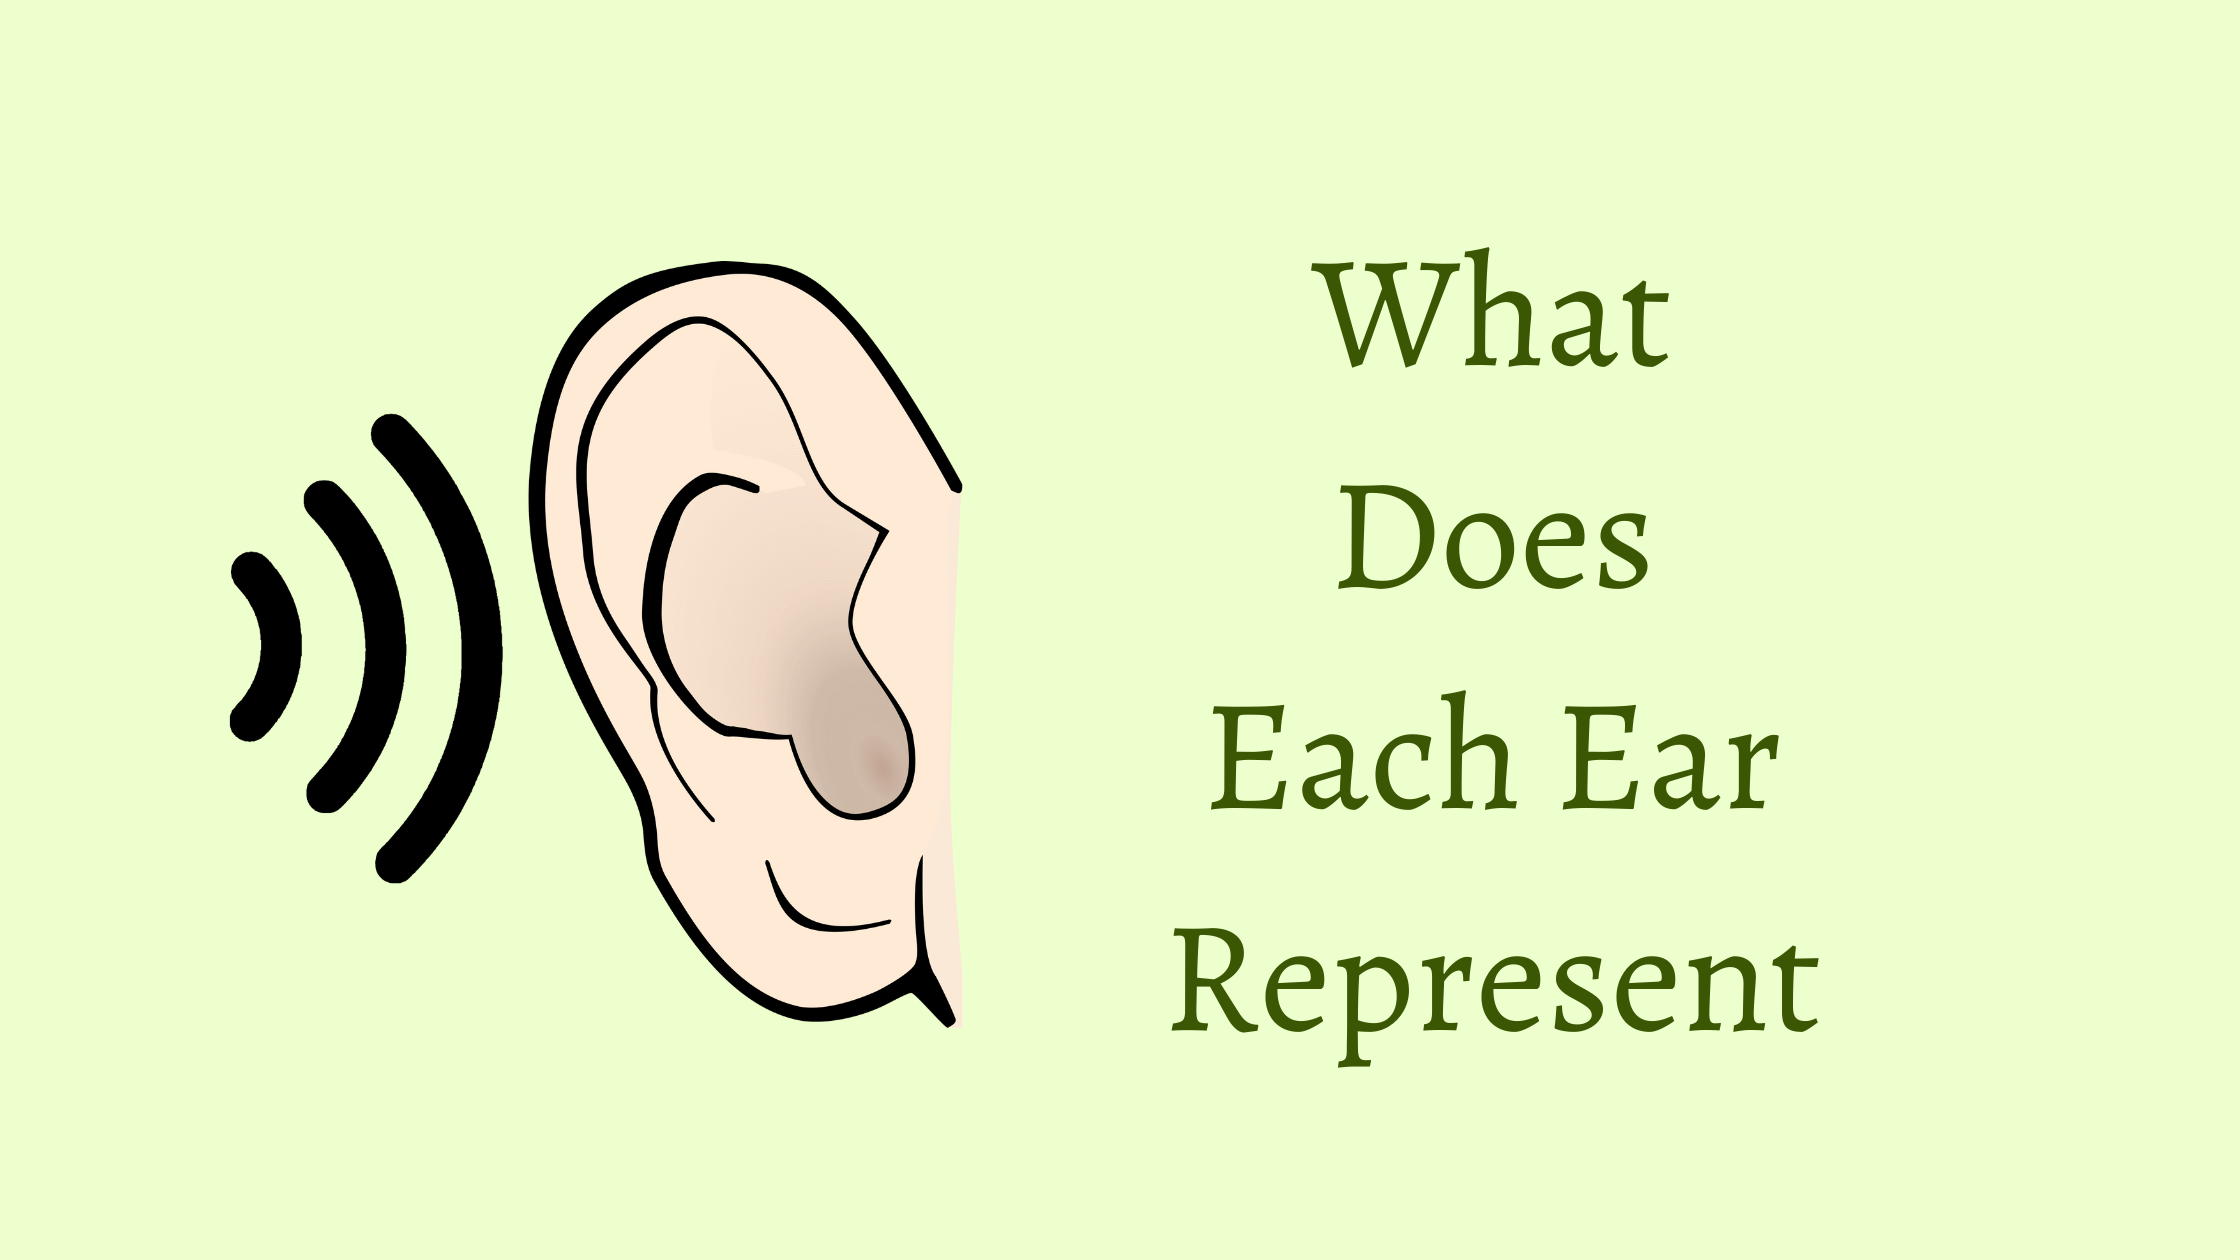 Each Ear Represent